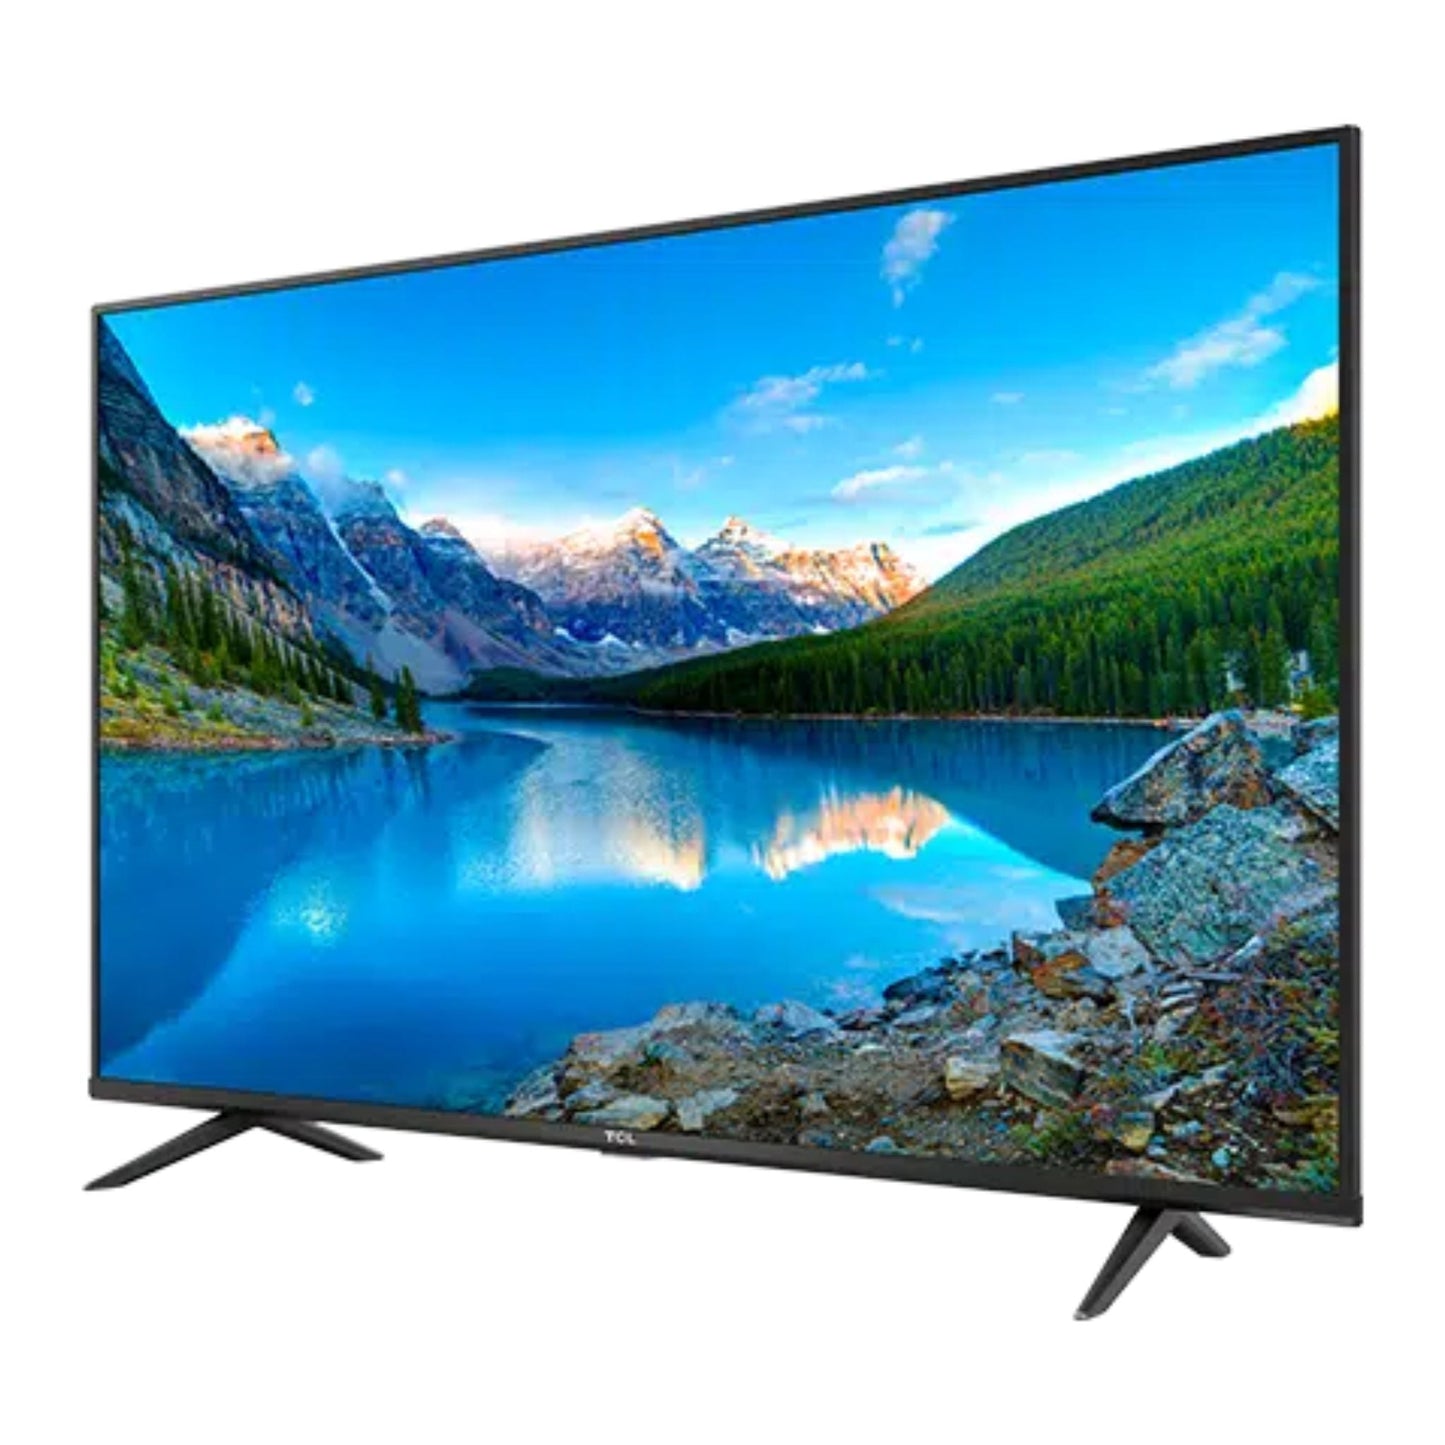 TCL 55 inch Smart TV, 55P6500U